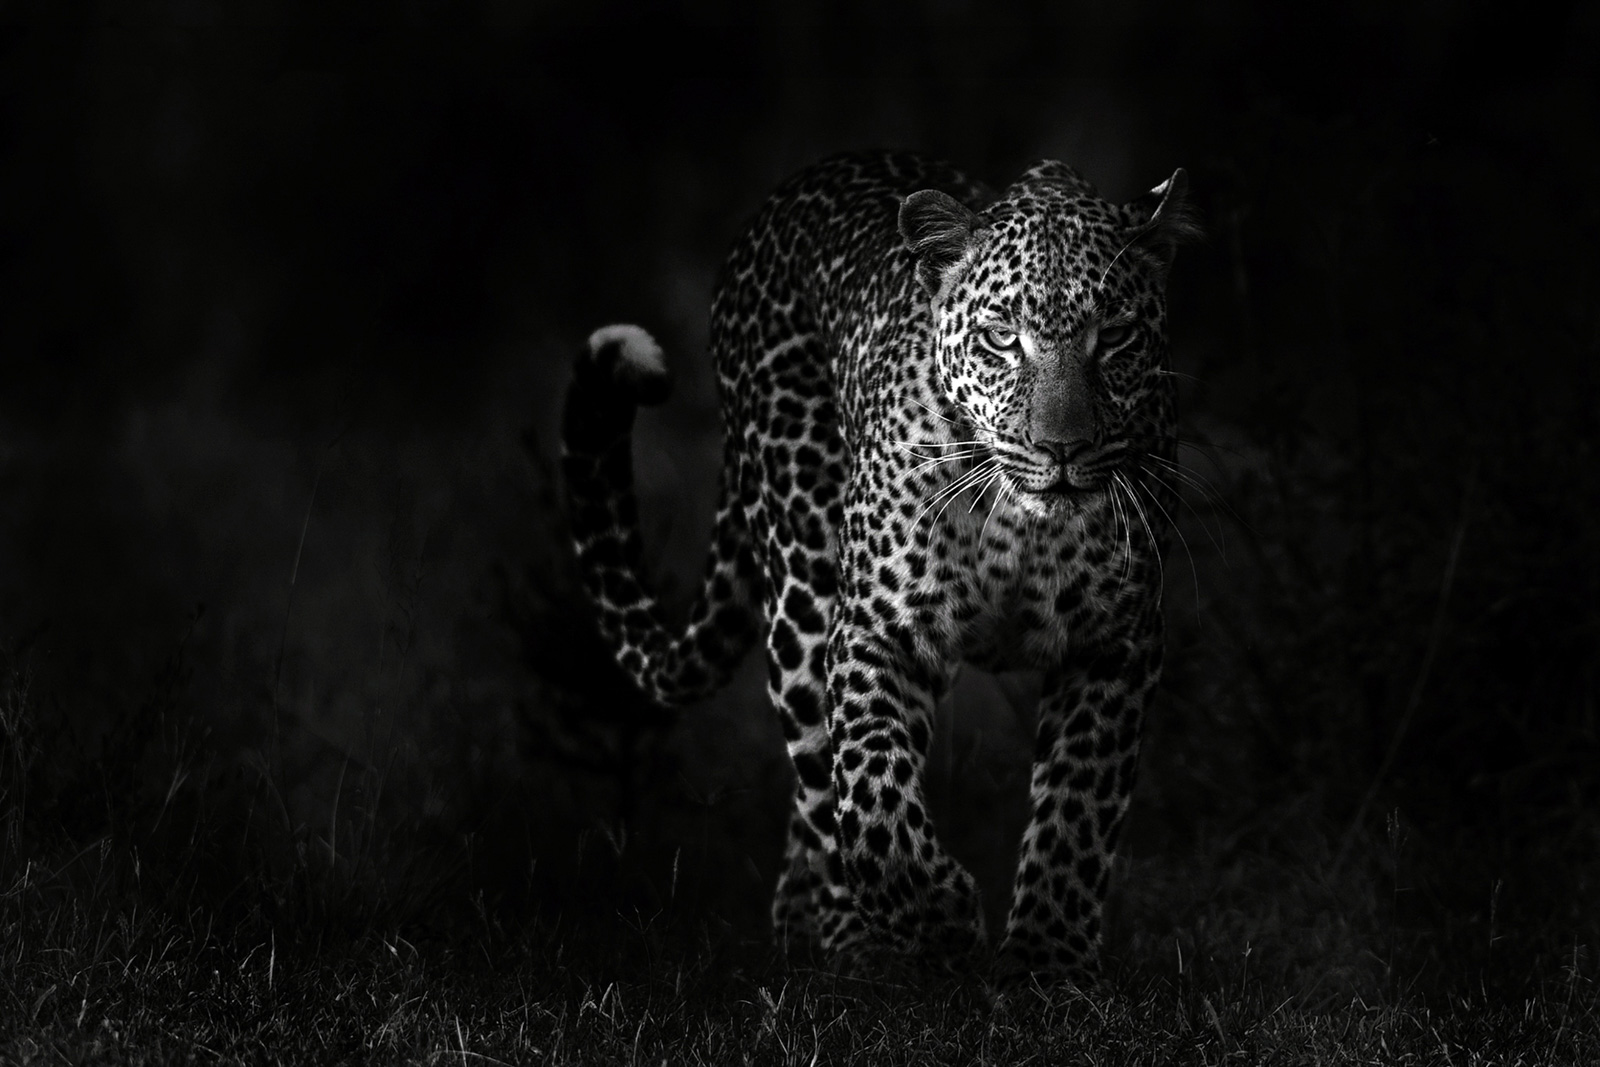 Underexposed leopard photo